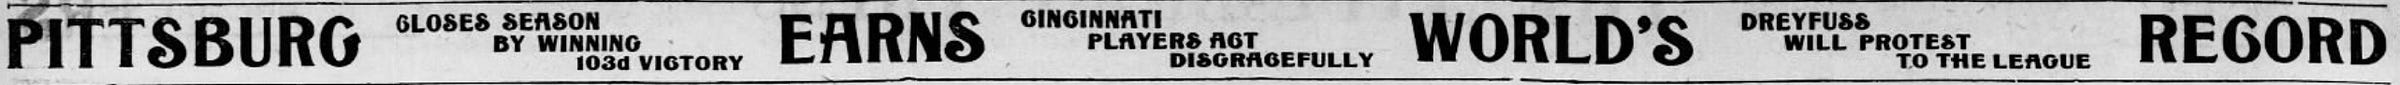 1902 Pittsburgh Press